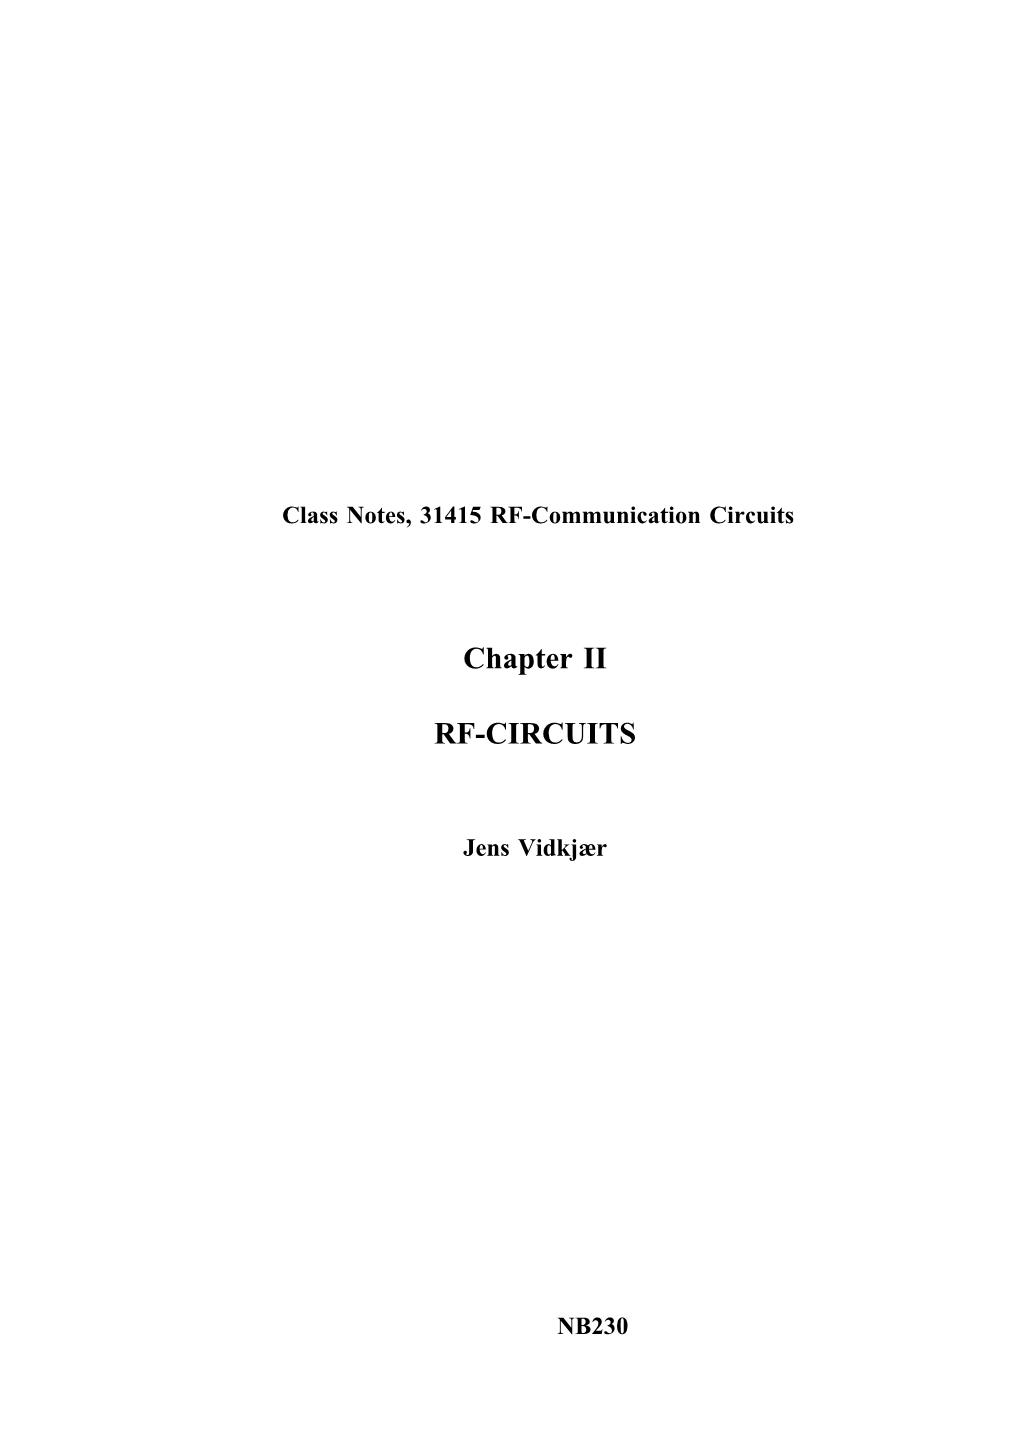 Chapter II RF-CIRCUITS